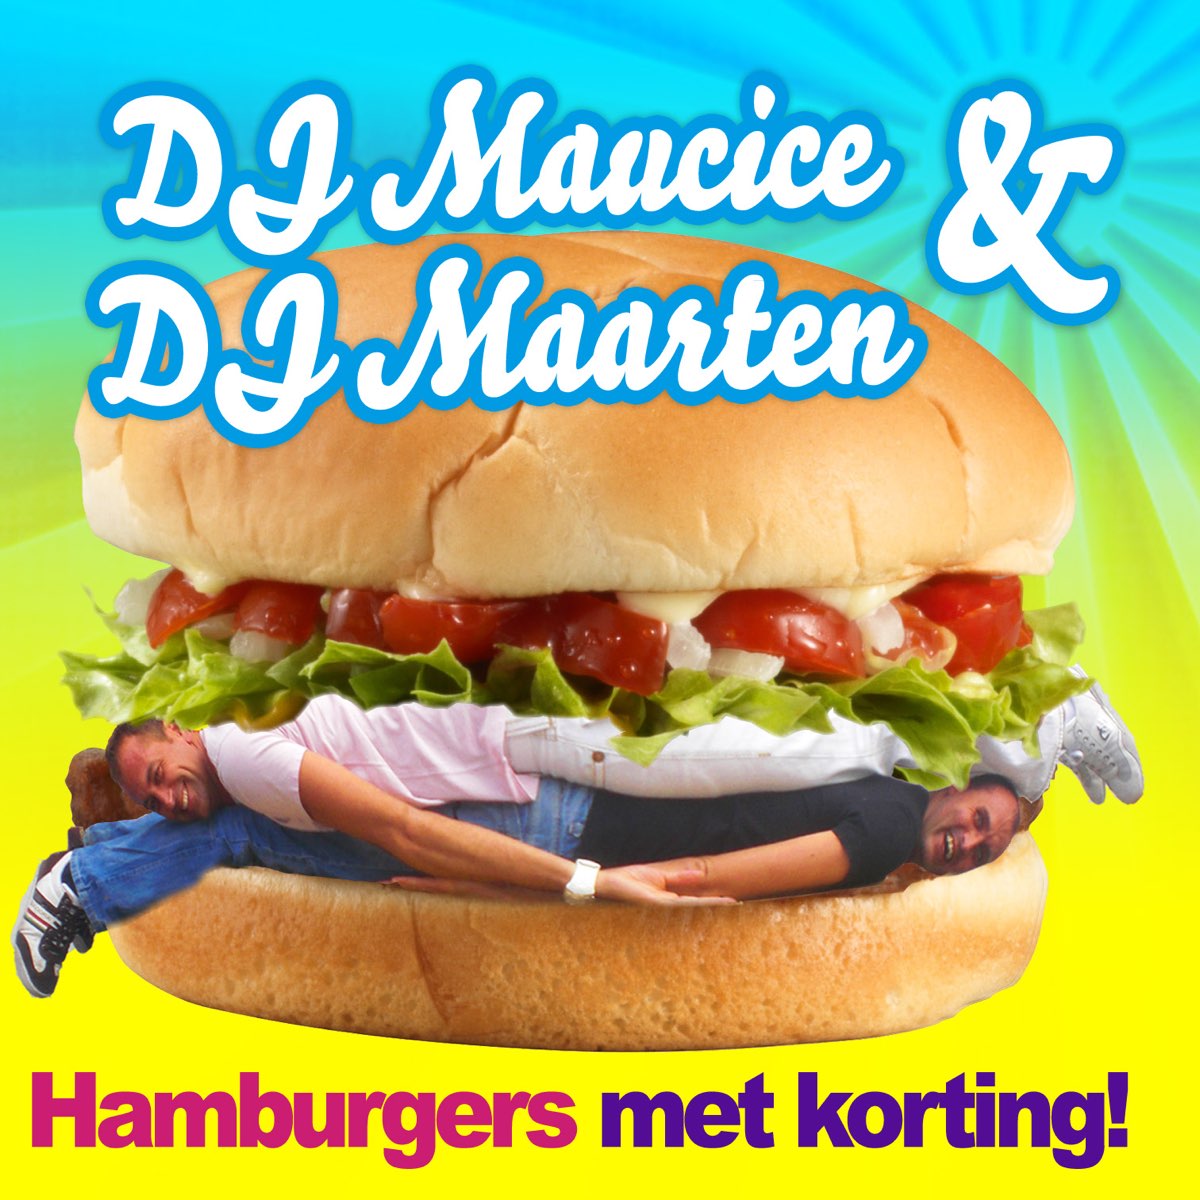 Nest Alternatief voorstel Panda Hamburgers met korting - Single by DJ Maurice & DJ Maarten on Apple Music